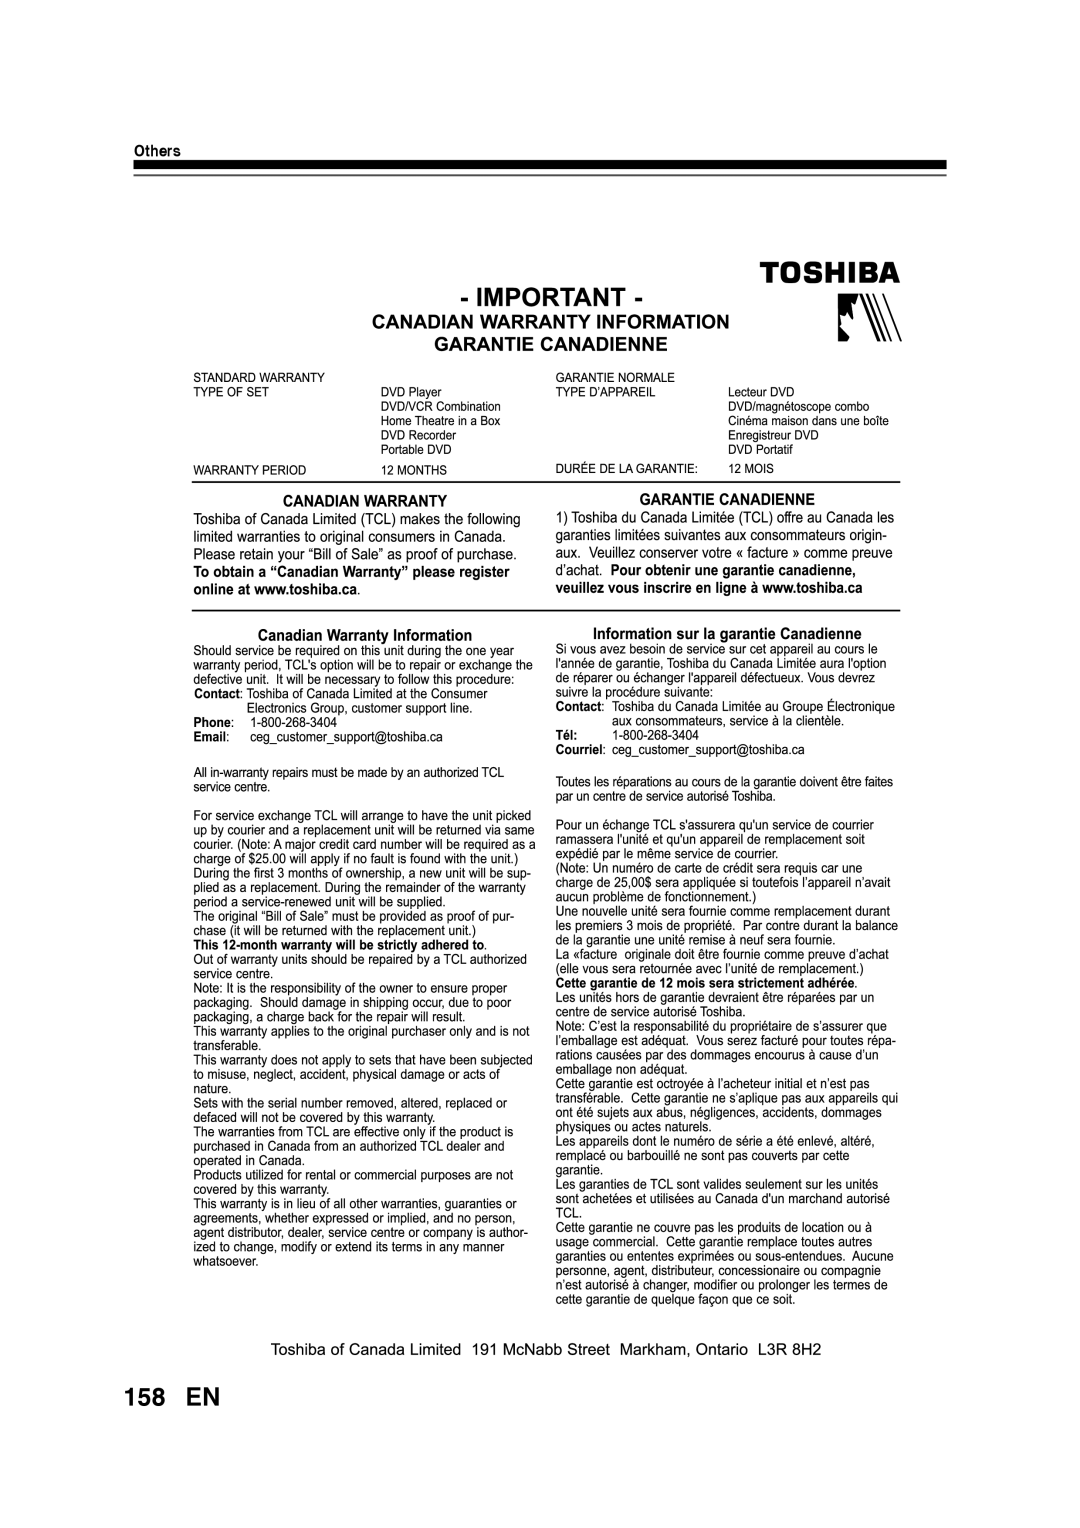 Toshiba D-RW2SU/D-RW2SC manual 158 EN, Others 